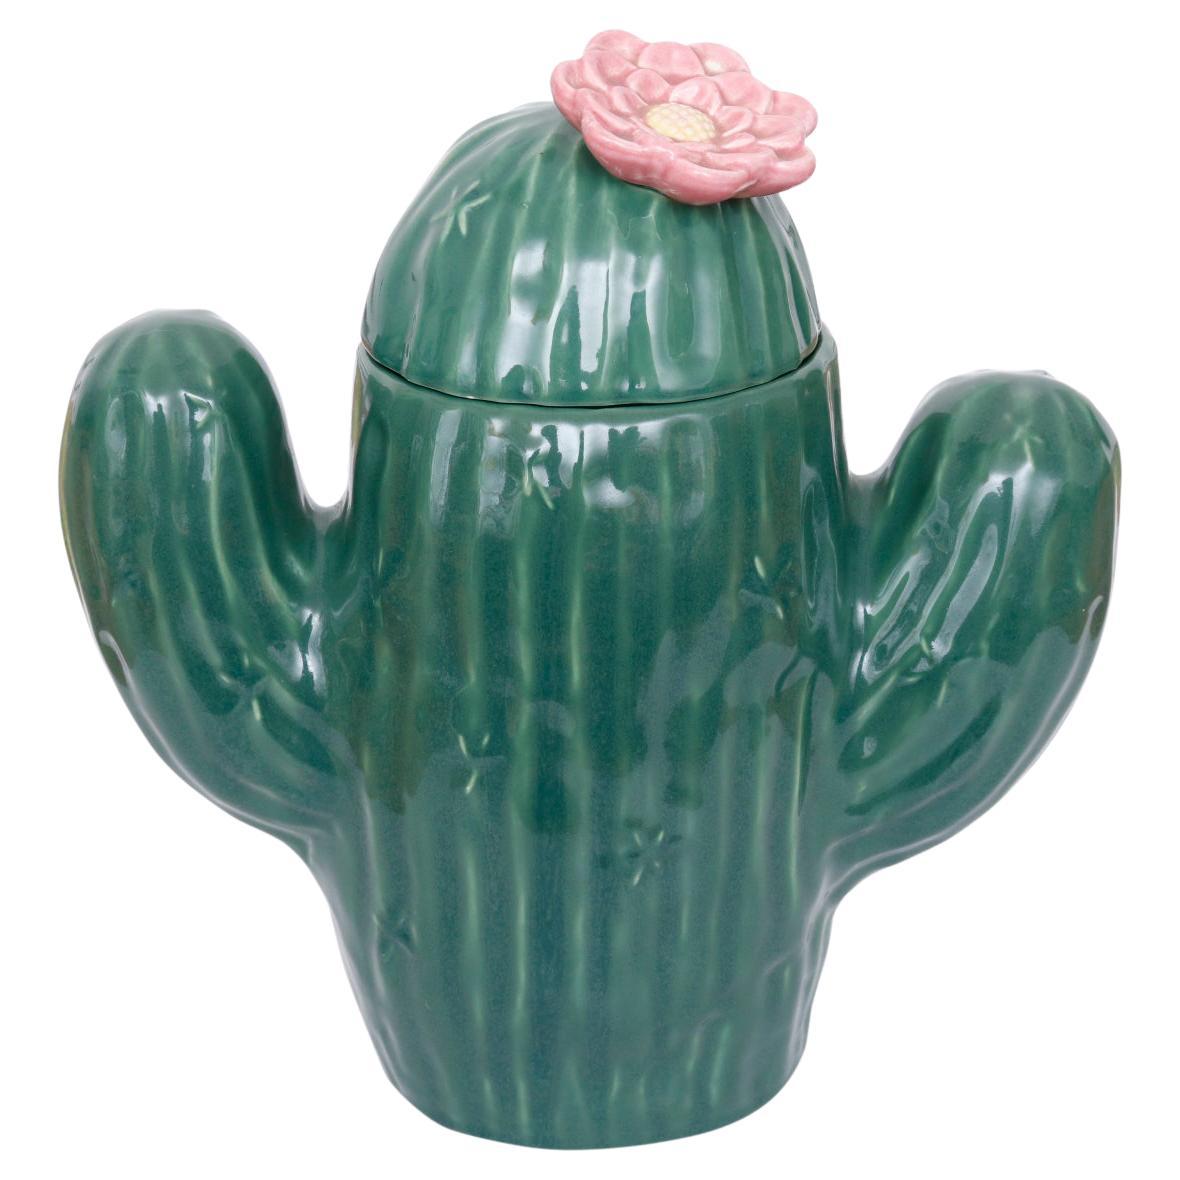 Ceramic Saguaro Cactus Cookie Jar For Sale